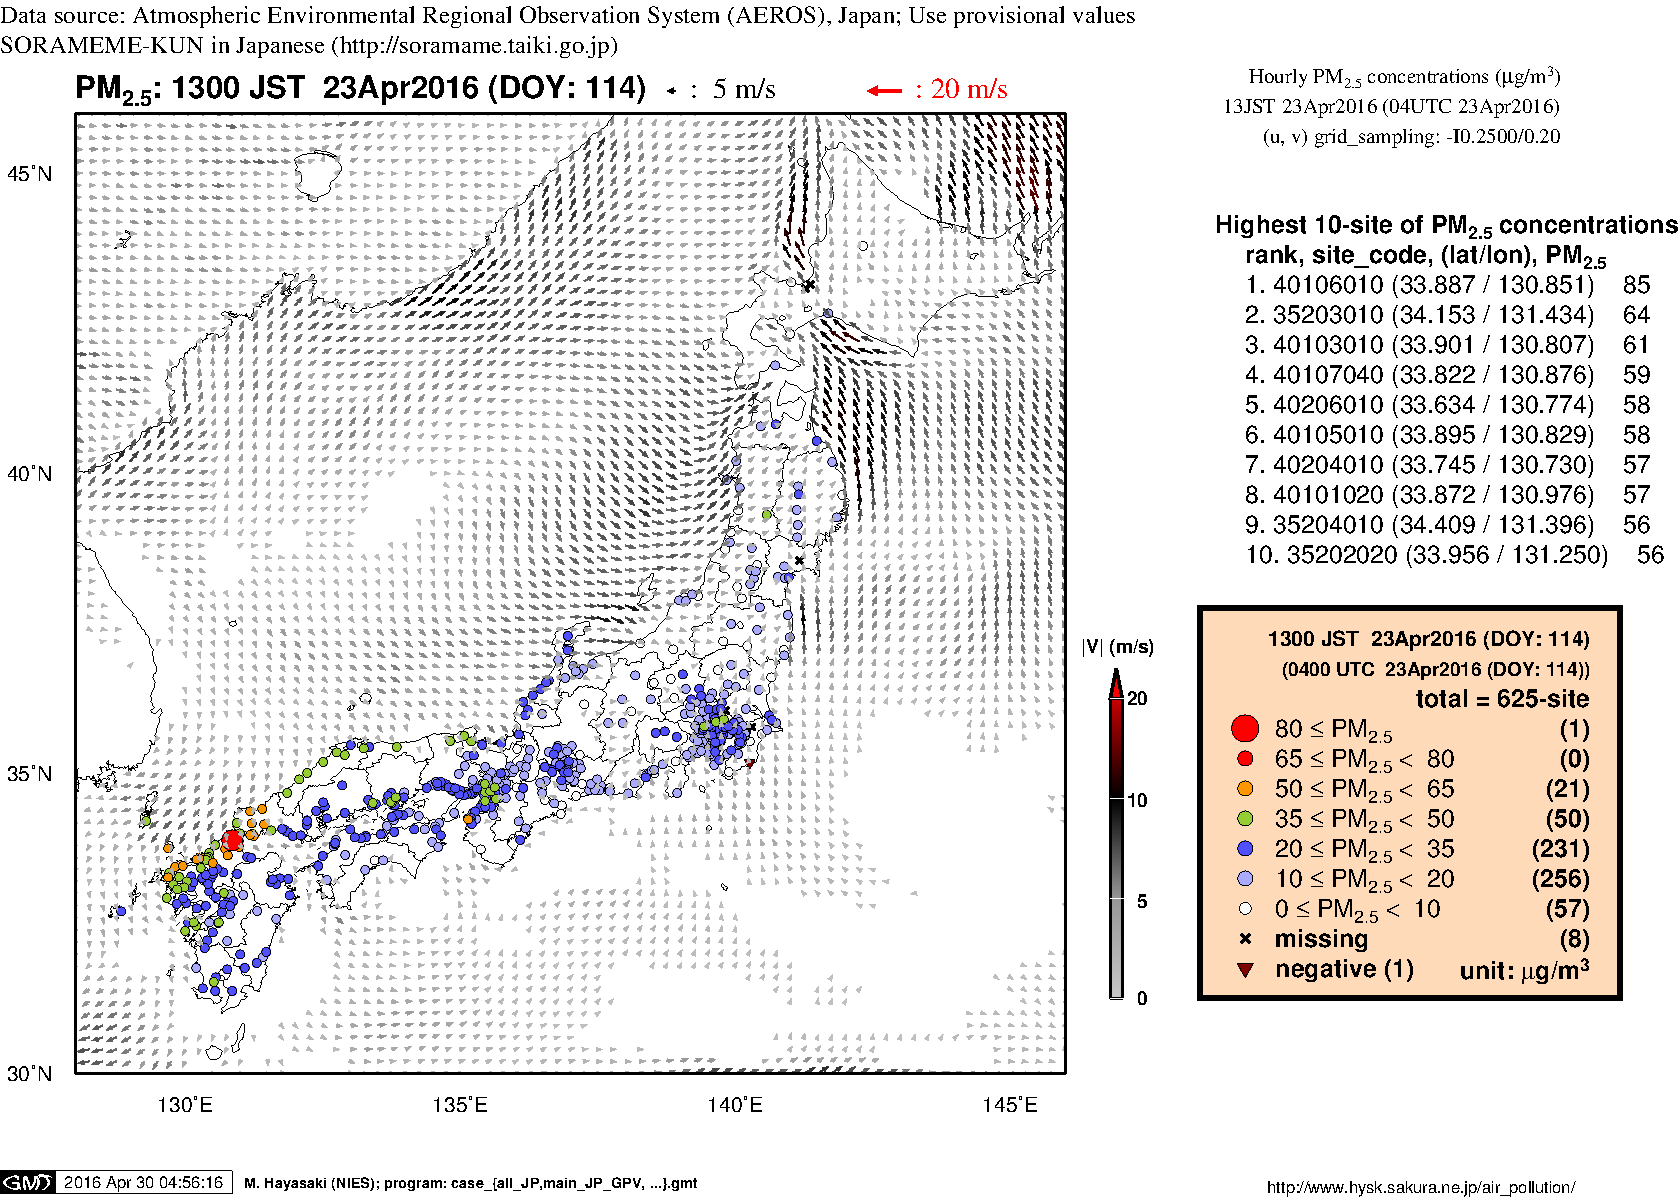 PM2.5 concentration in mainland Japan (13JST 23Apr2016)